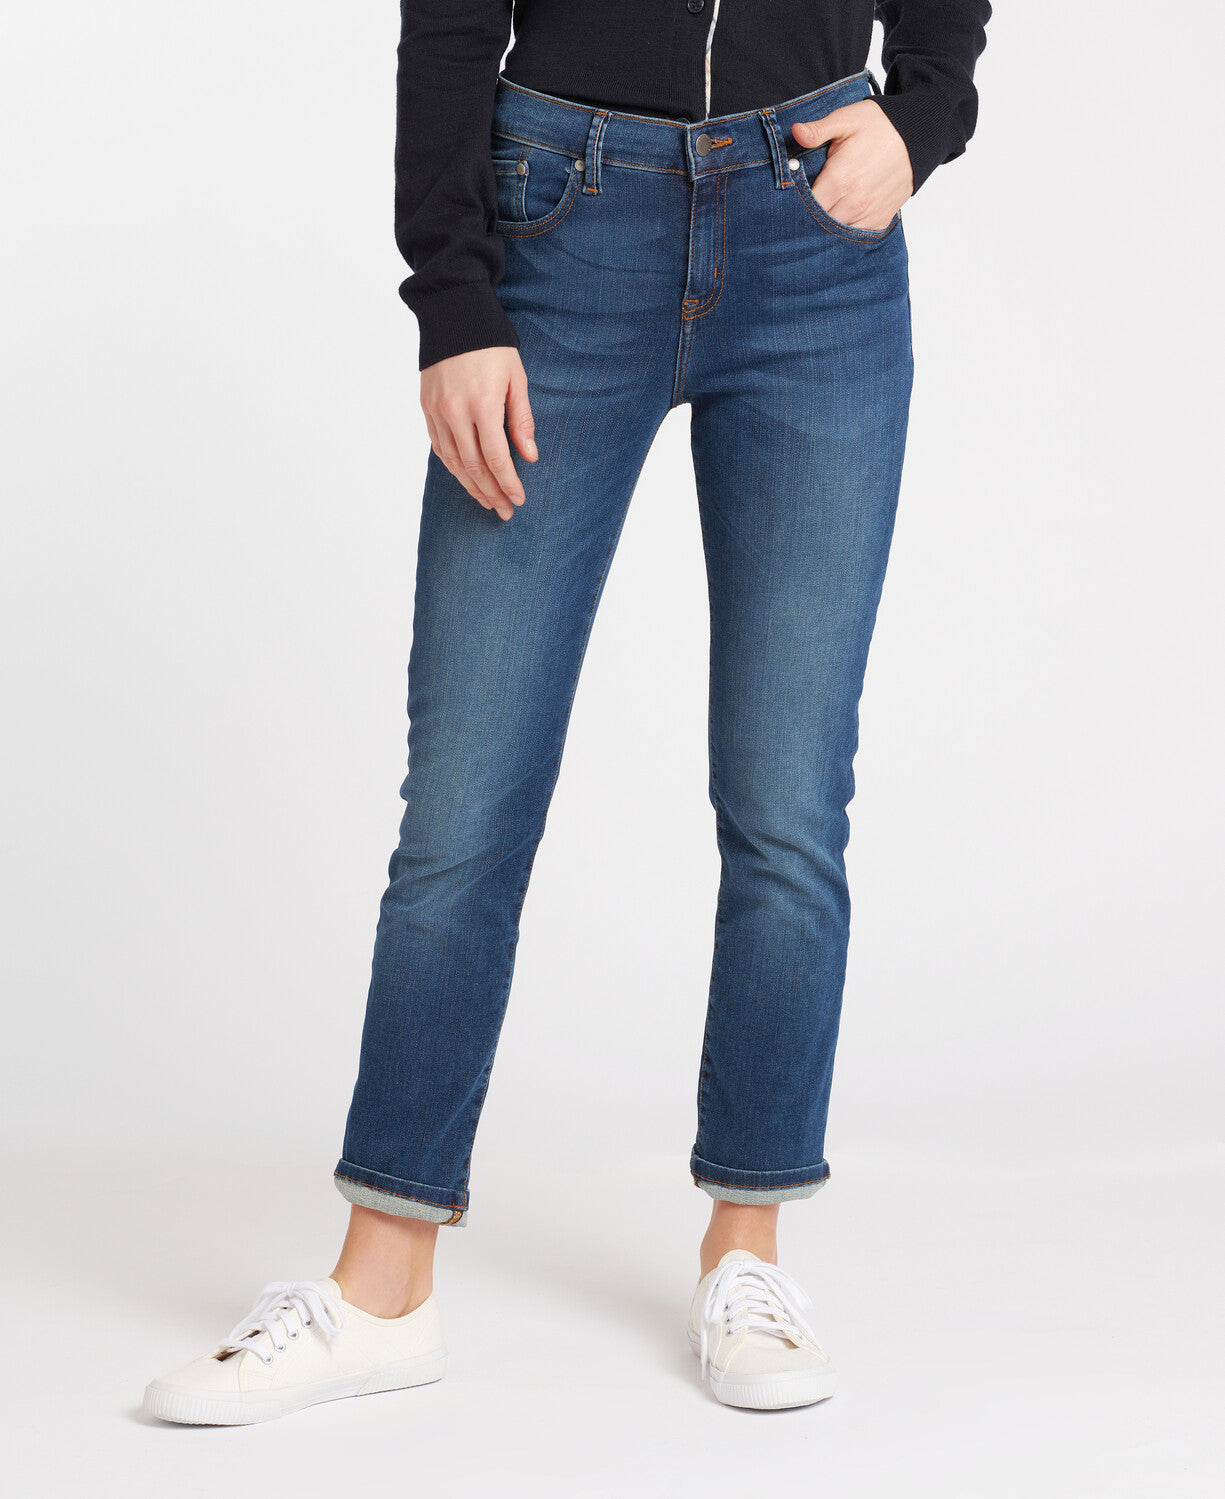 Barbour Women’s Essential Slim Fit Jeans